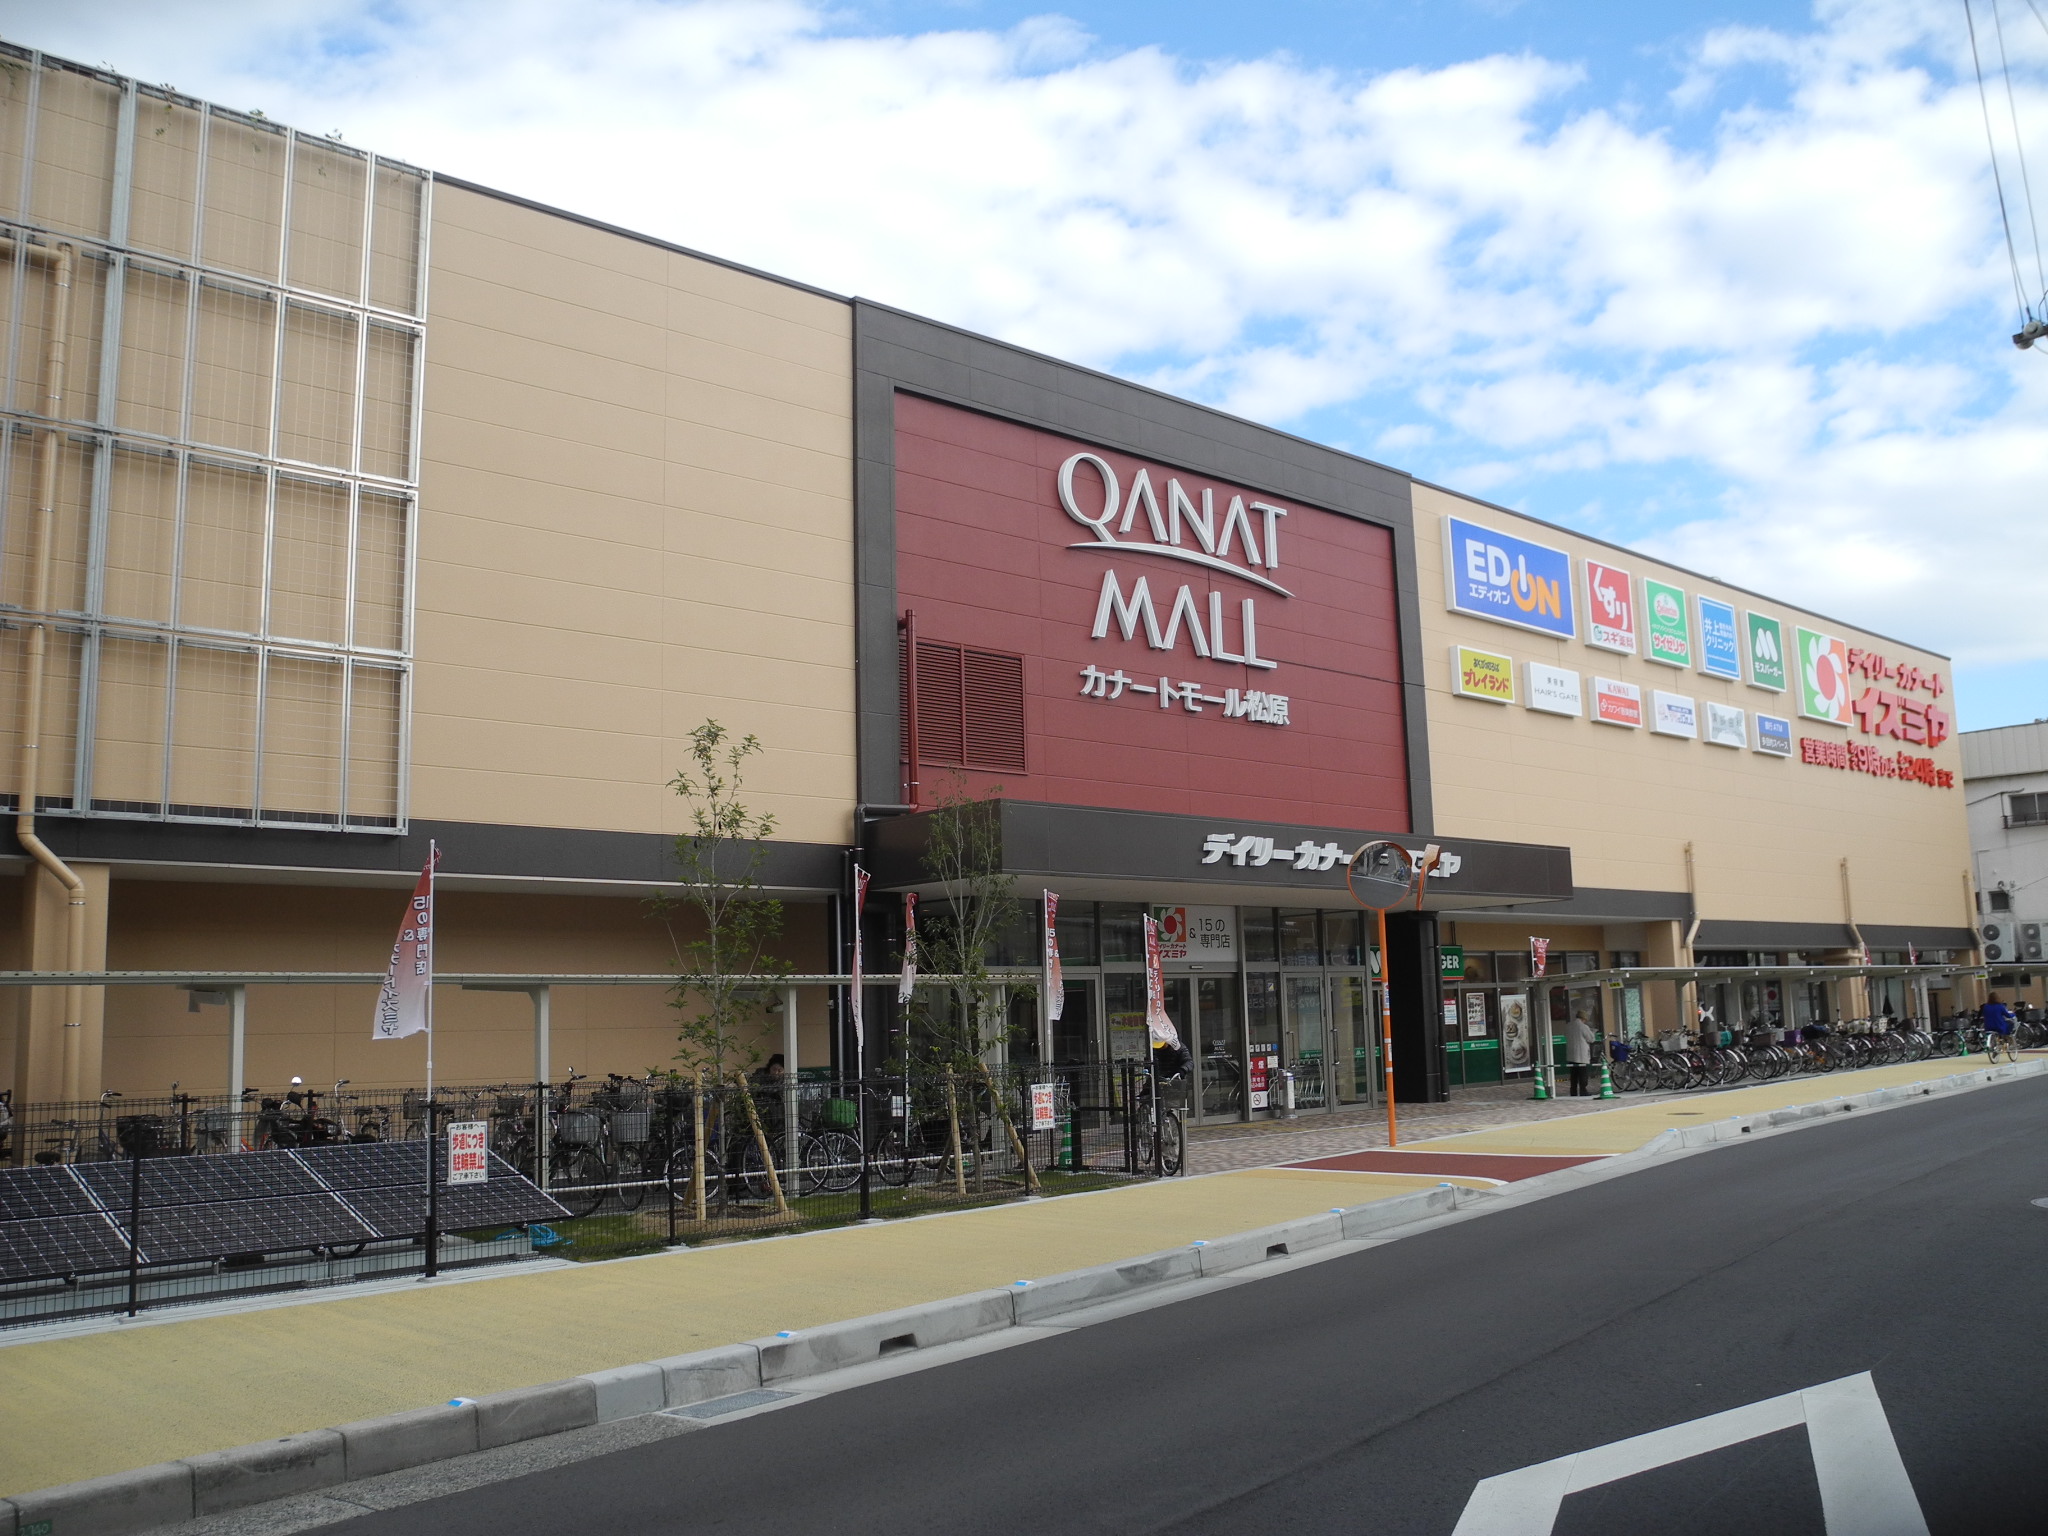 Shopping centre. 648m until qanat Mall Matsubara (shopping center)